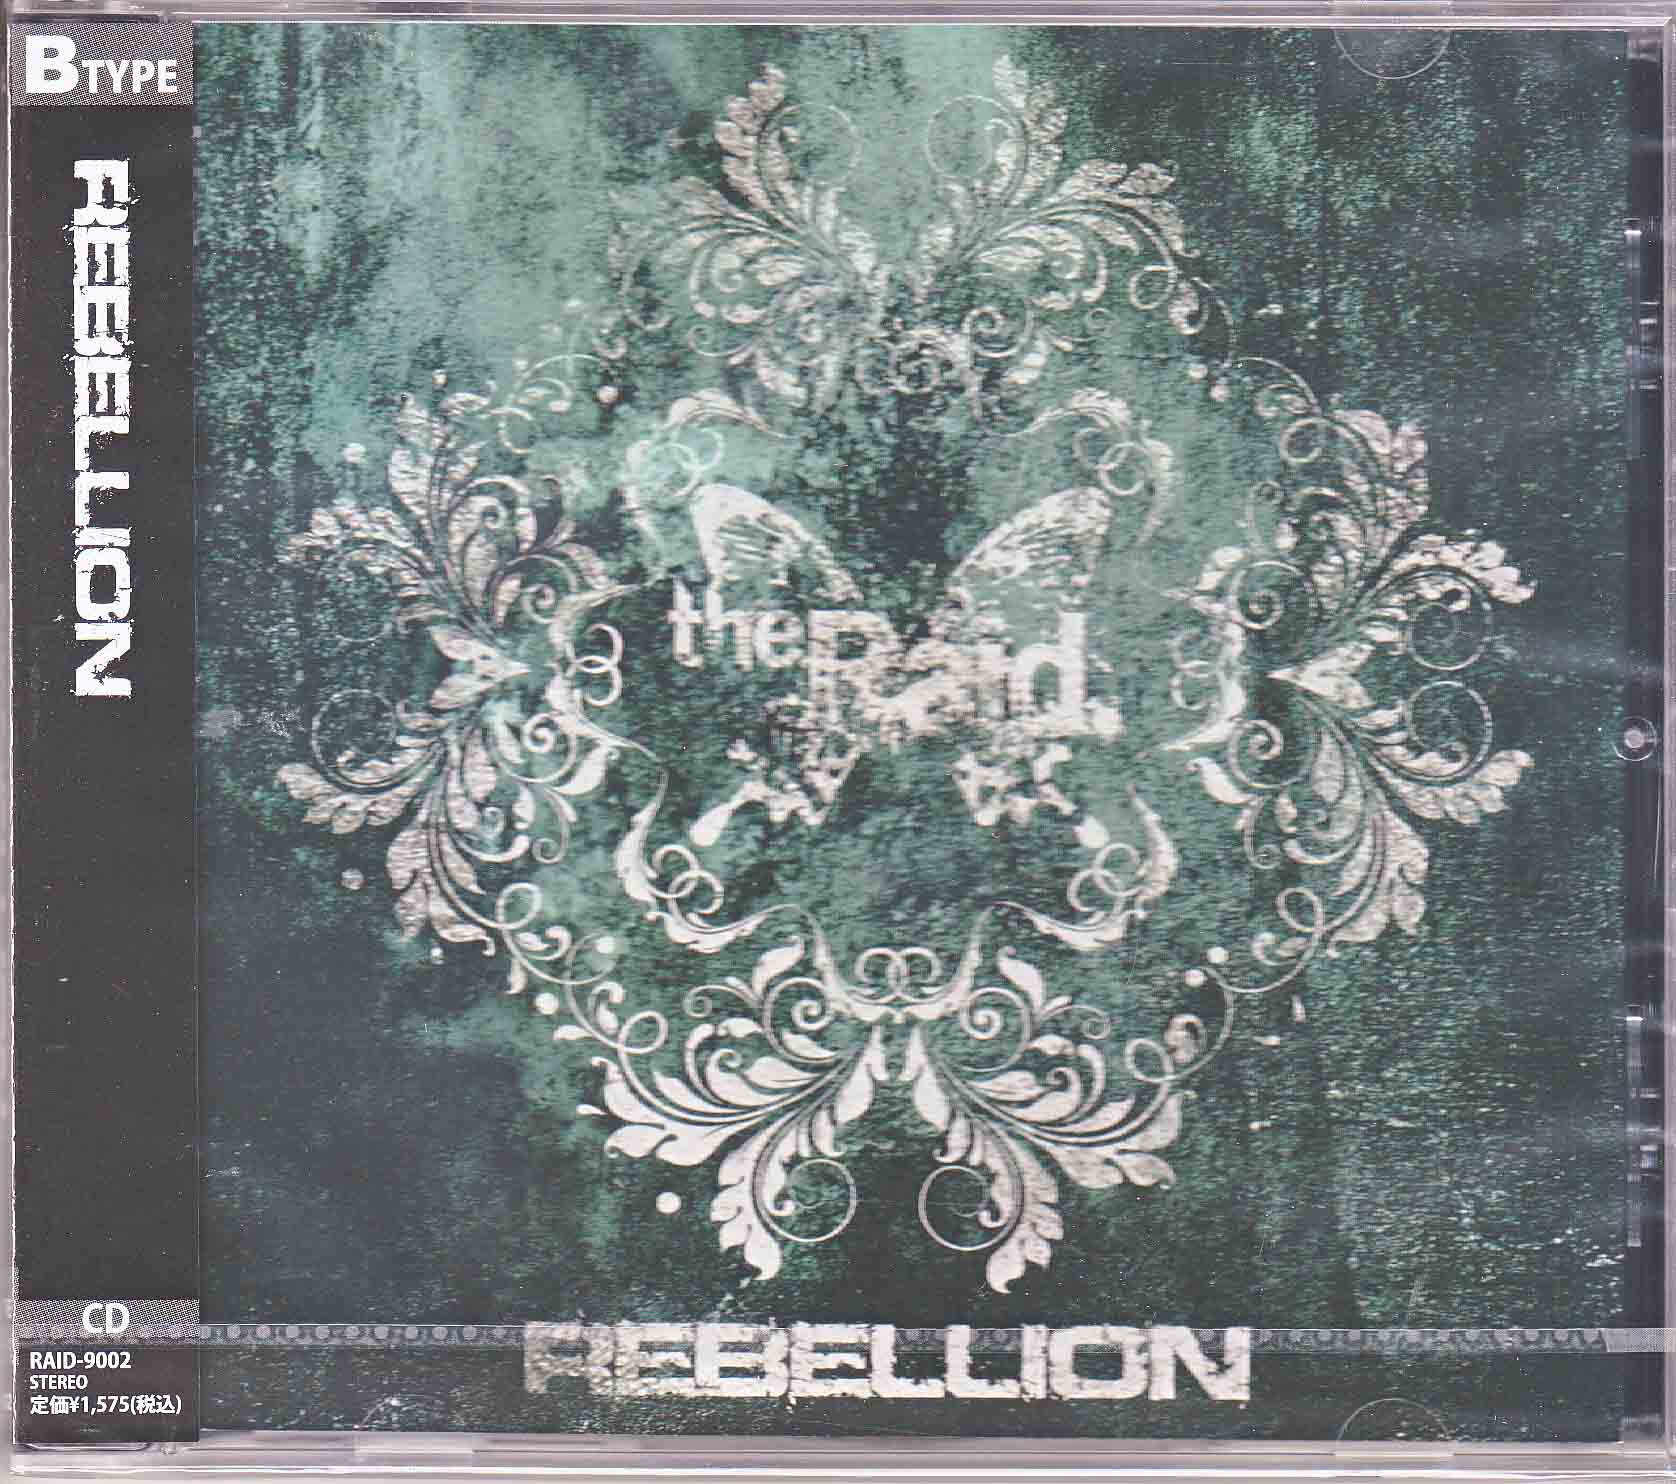 the Raid. の CD REBELLION【B-type】